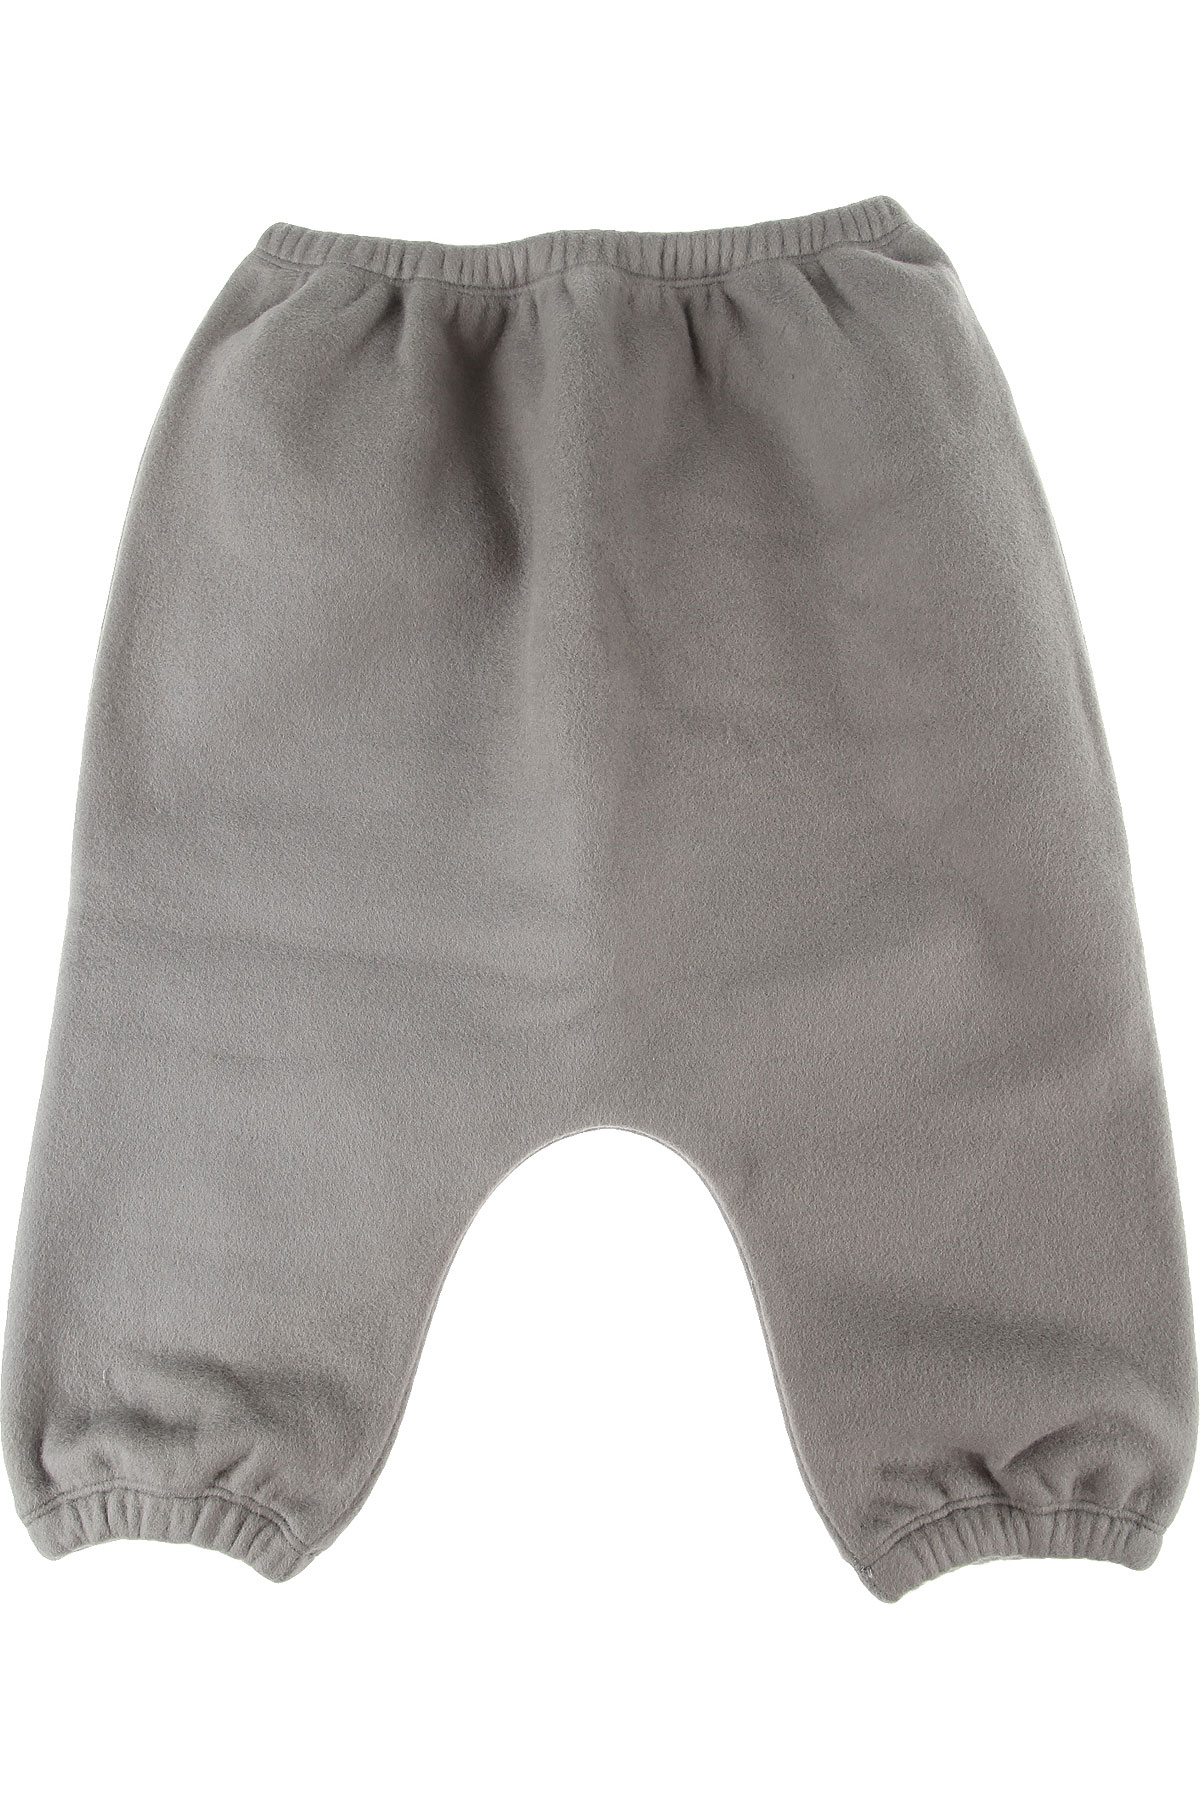 Baby Boy Clothing Douuod, Style code: 2r6540-z0884-918